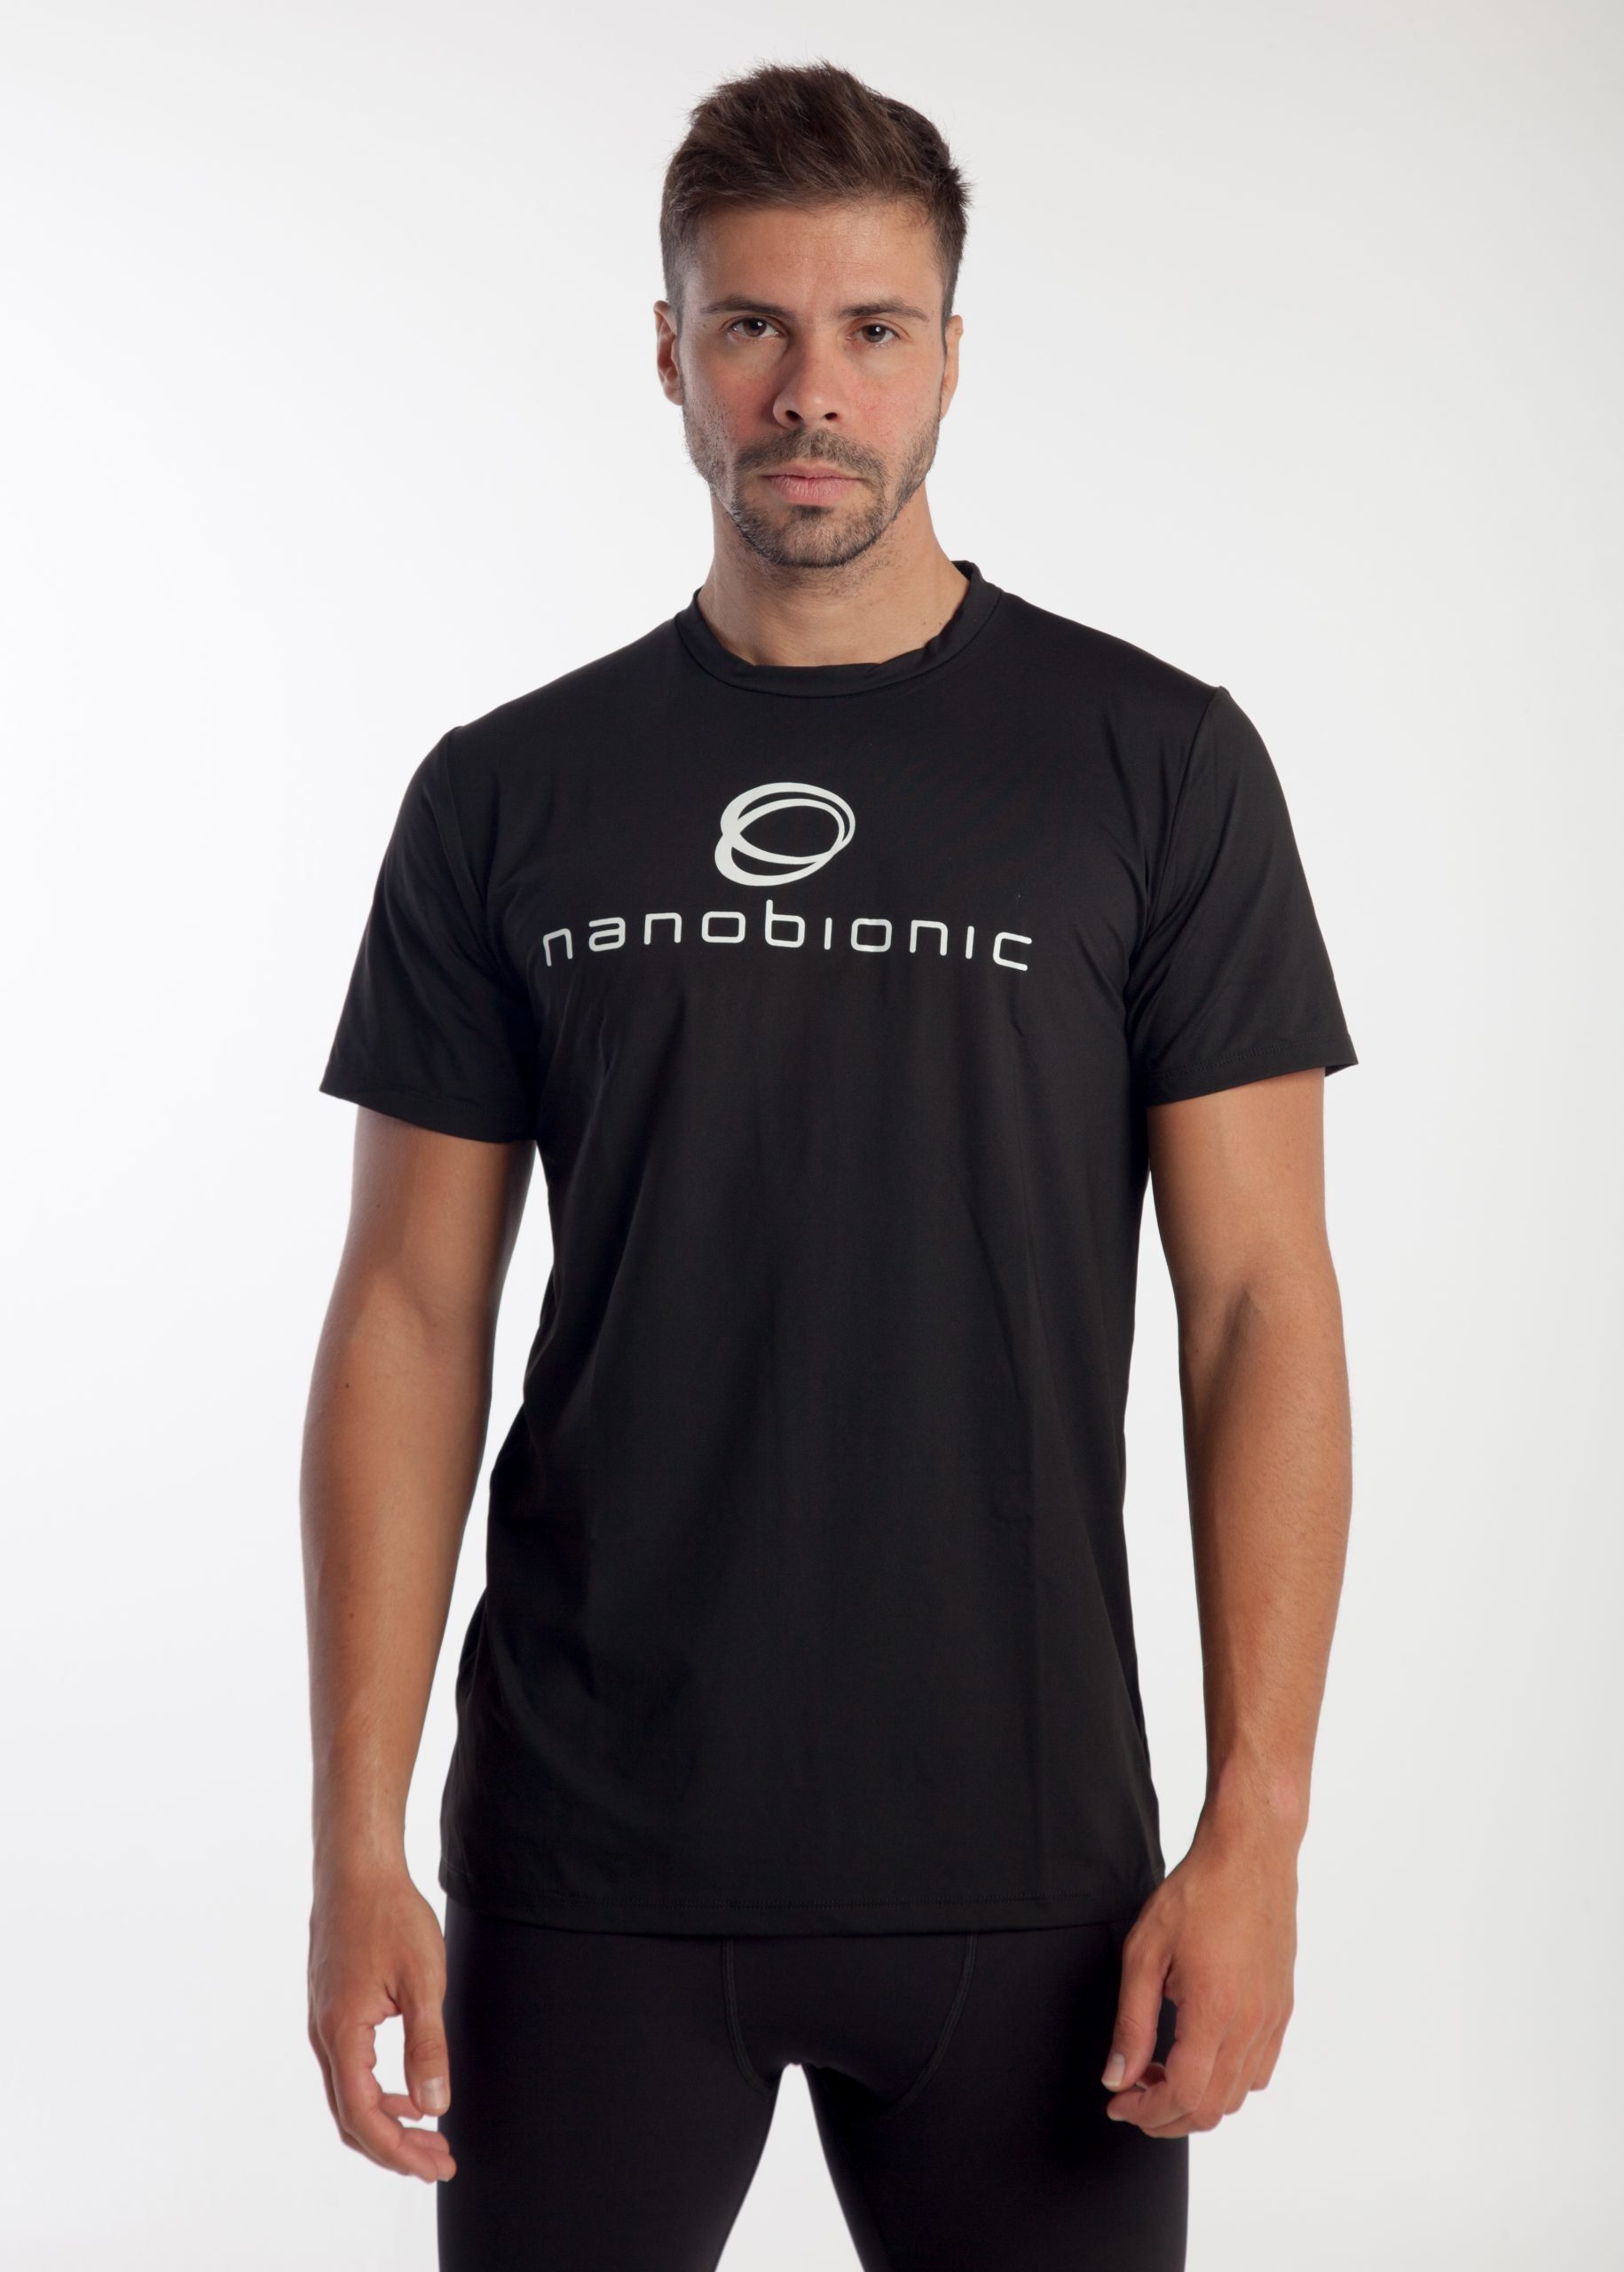 NANOBIONIC® Funktionsshirt Nanobionic® Iconic T-shirt (schwarz/weiß) (Innovative und exklusive NANOBIONIC®-Technologie, NASA I-Tech Award) NANOBIONIC® - eine nahezu endlose Energiequelle!!